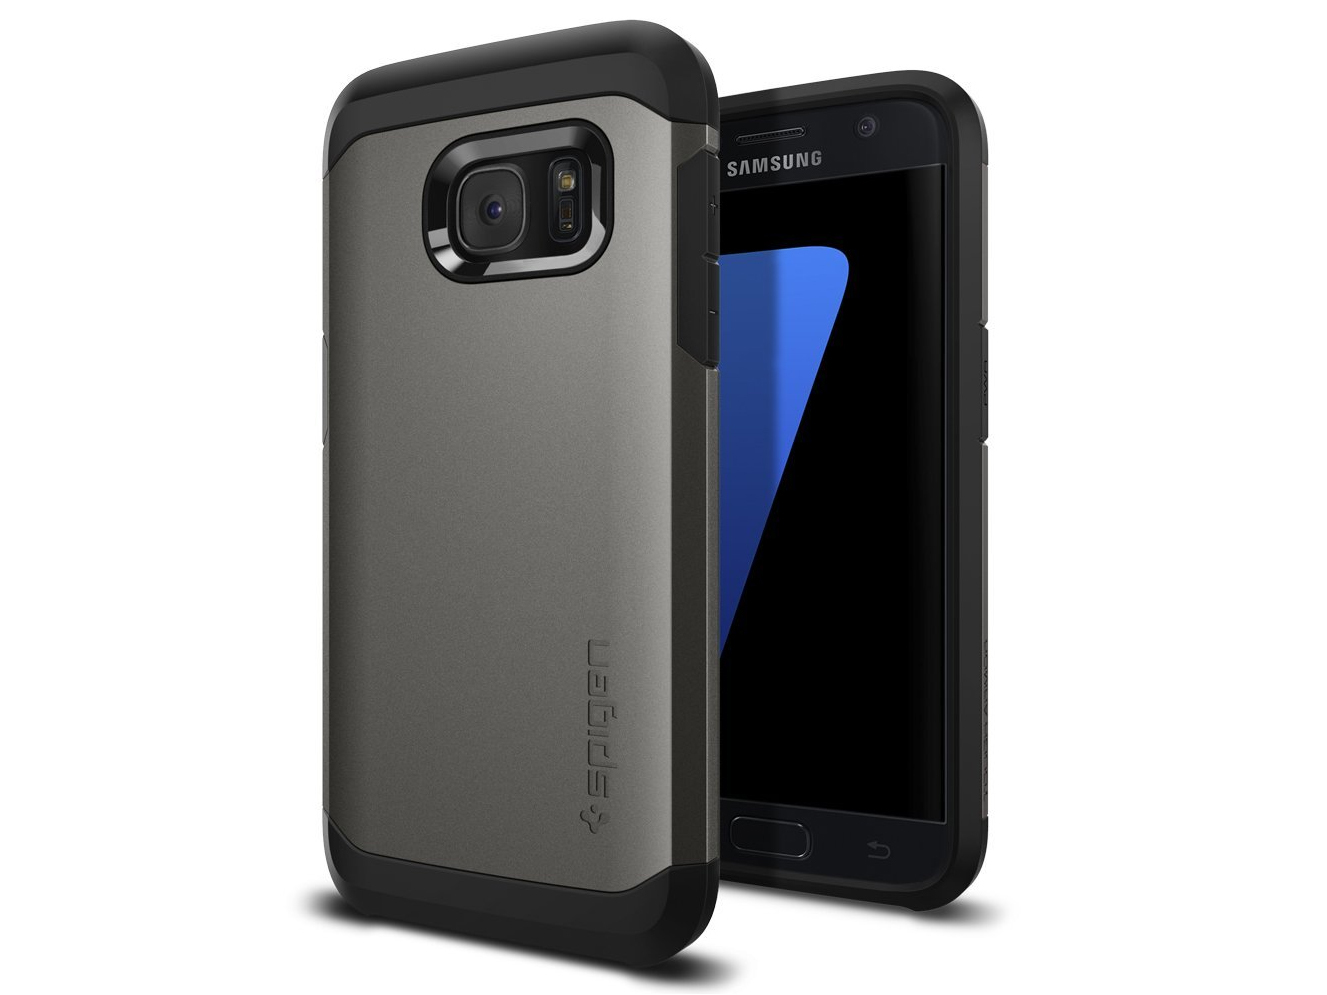 wijsheid boog Aja The best Samsung Galaxy S7 cases, headphones chargers and accessories Stuff